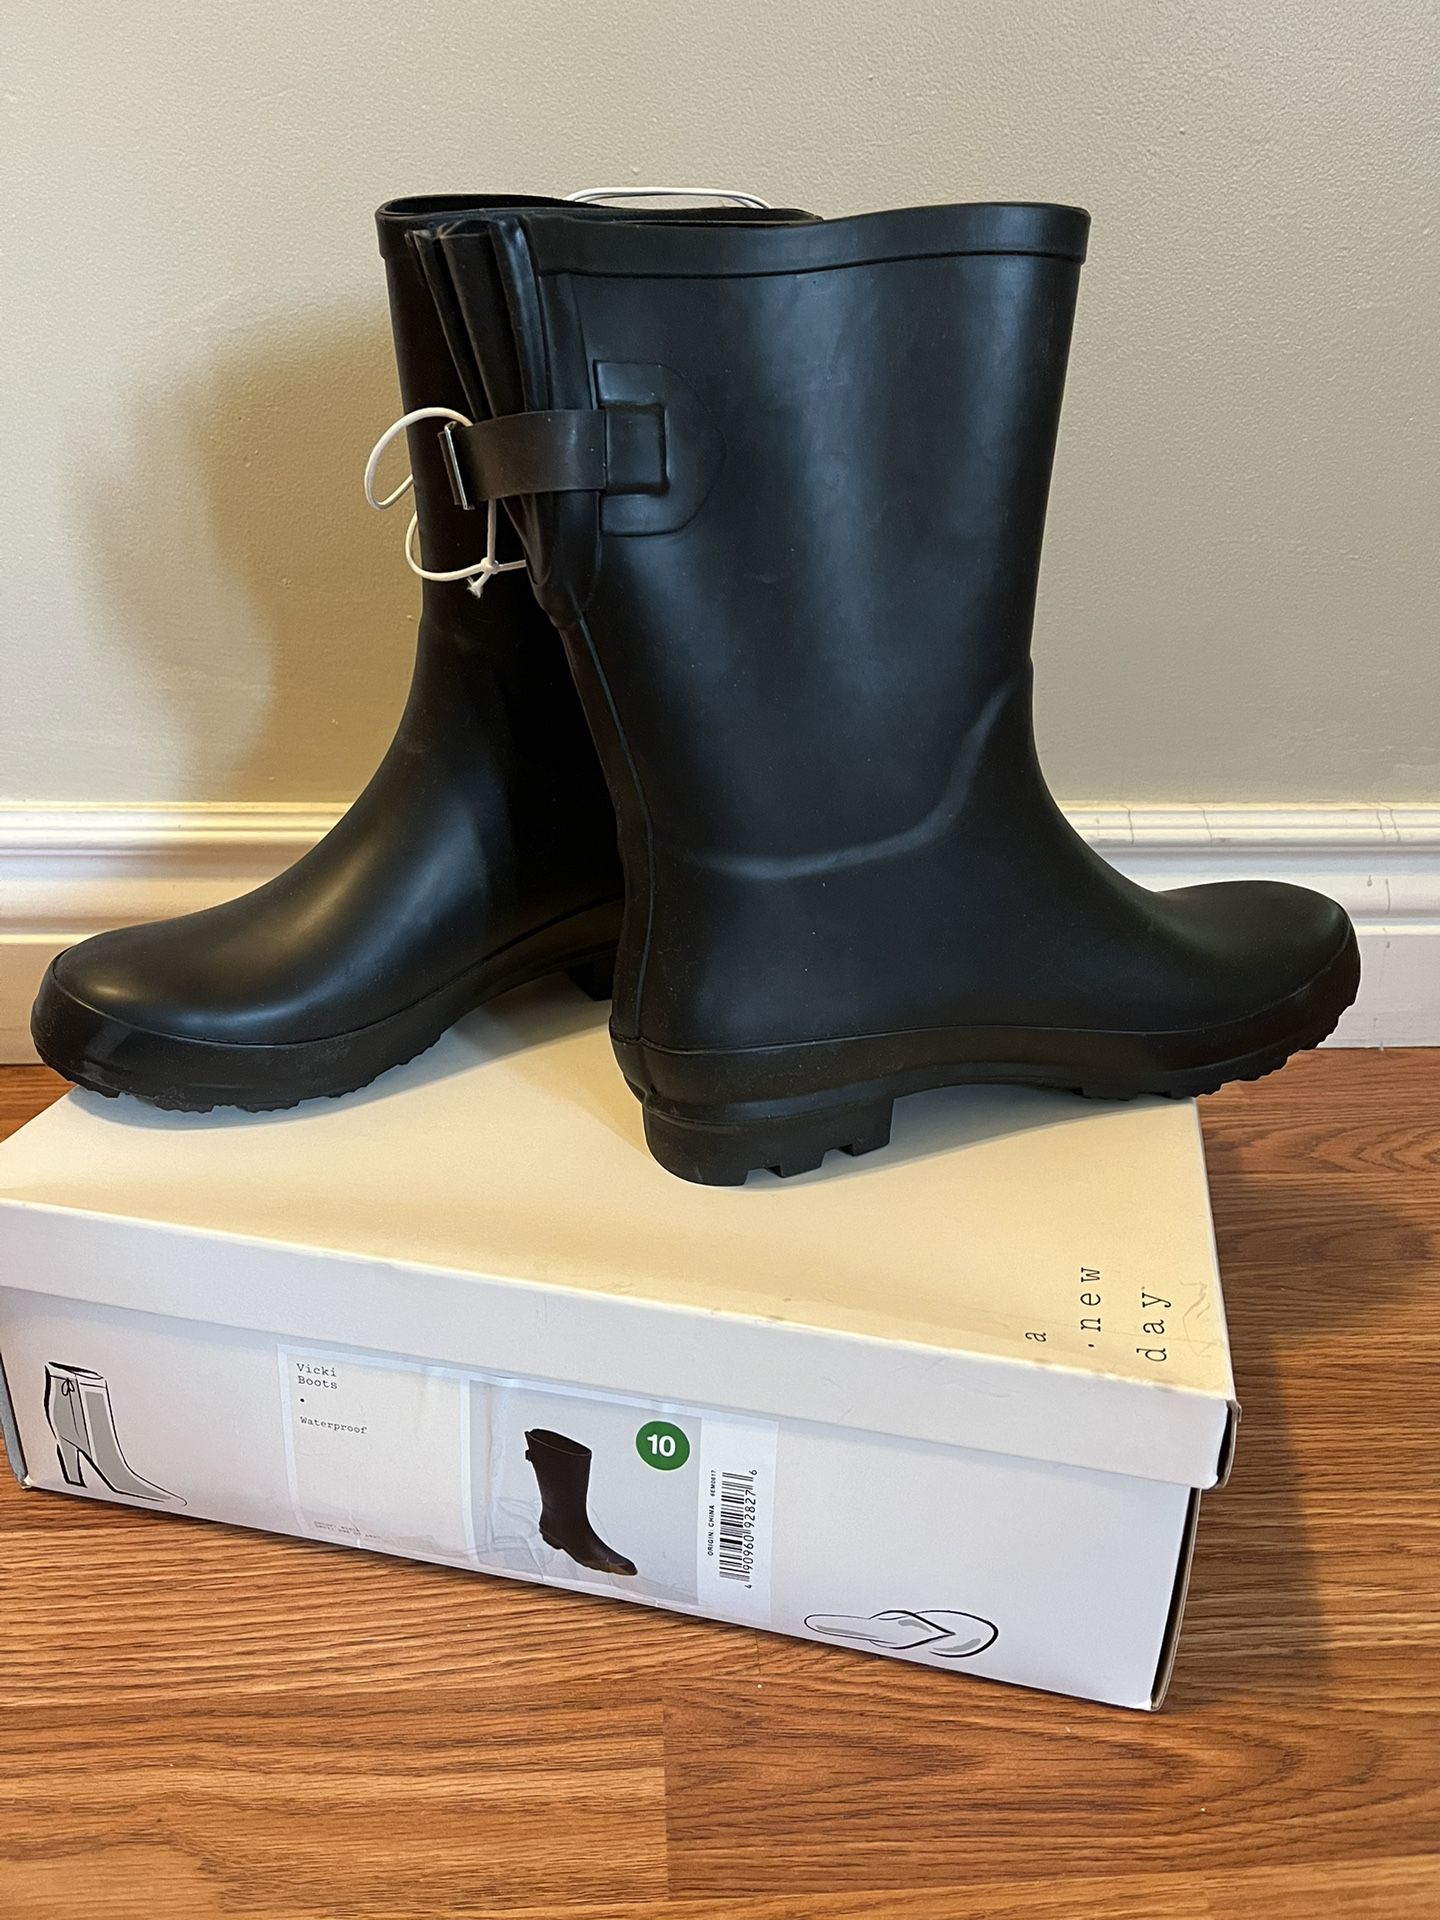 New Waterproof Rain Boots - Black. Never Worn.  Size 10. 